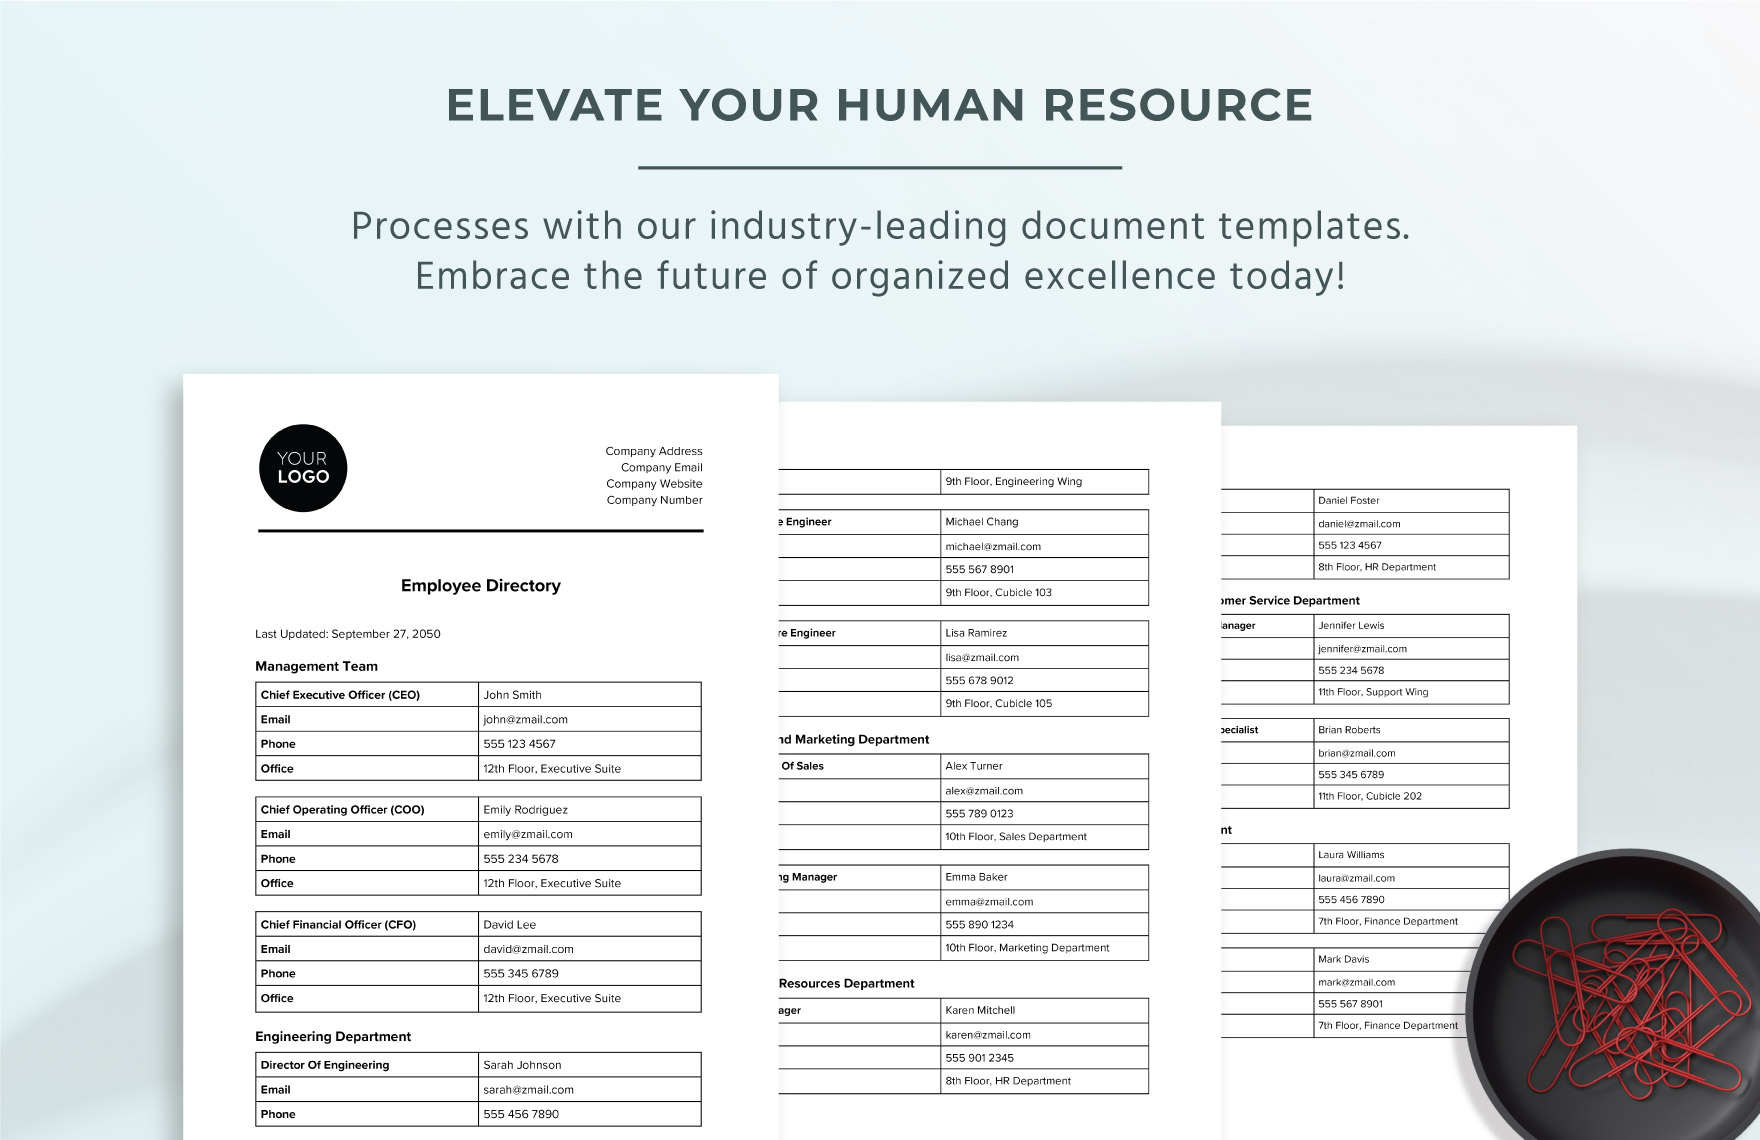 Employee Directory HR Template